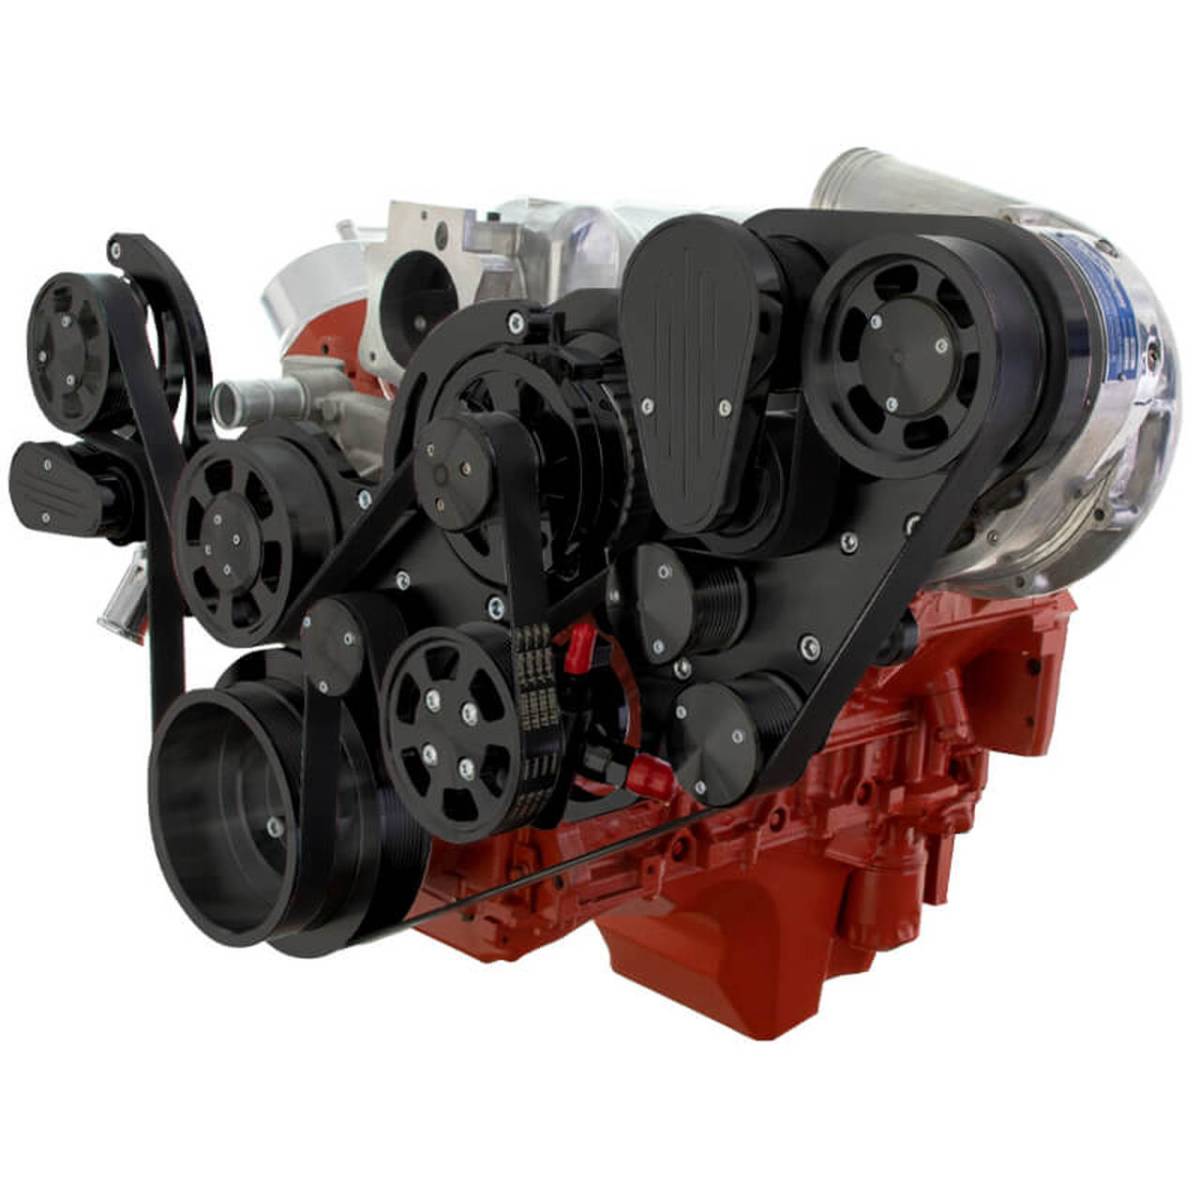 CVF Racing - CVF Wraptor Chevy LS Engine Procharger Serpentine Bracket System with Alternator - Black - Image 1